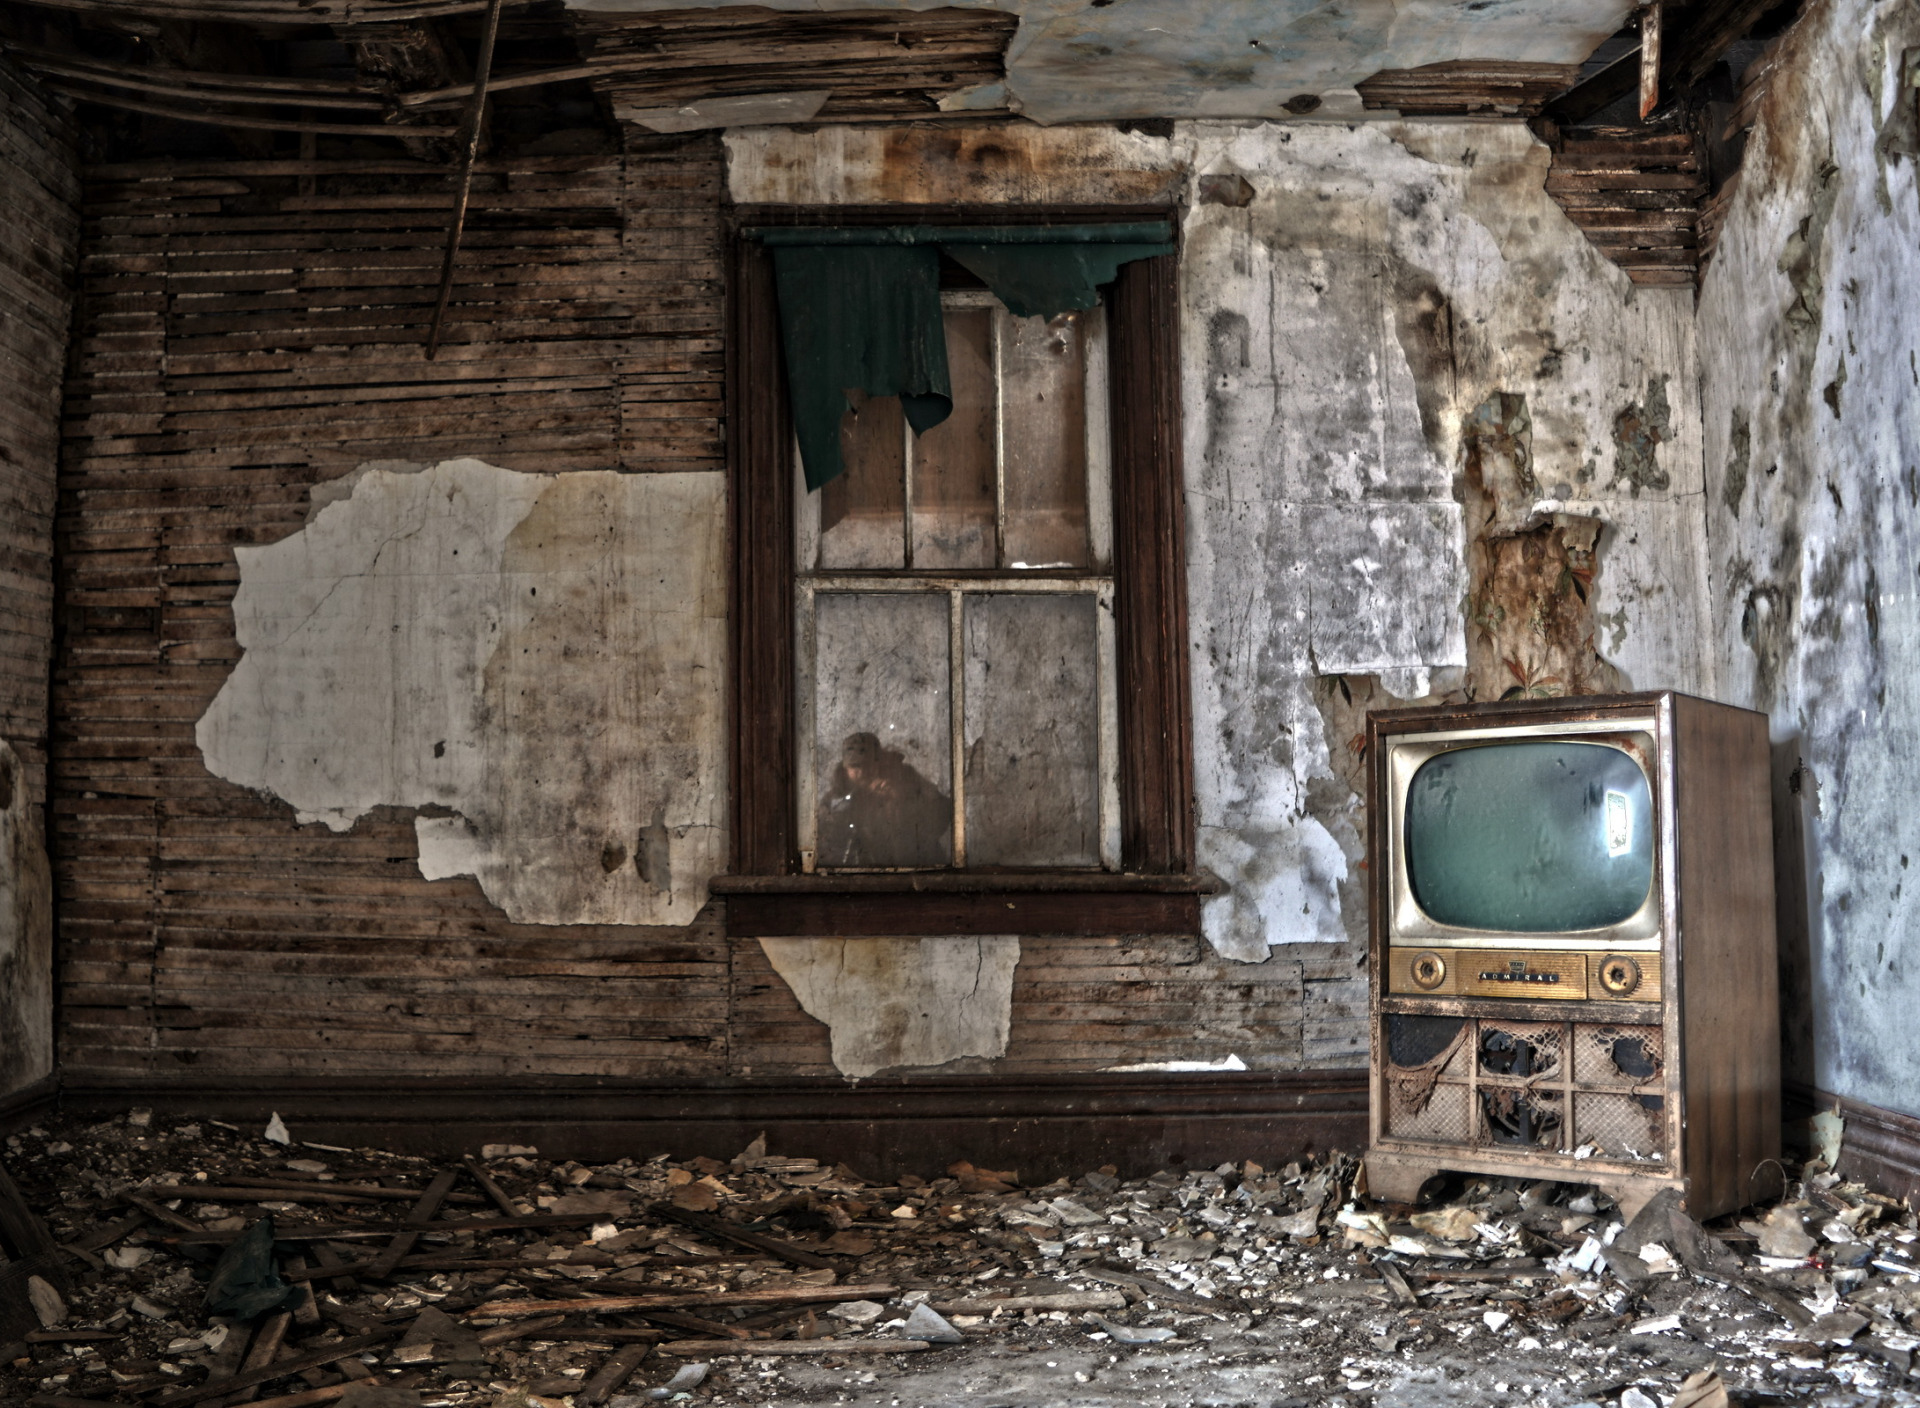 Кинопоиск на старом телевизоре. Старый телевизор. Старинный телевизор. Заброшенный телевизор. Старый телевизор в комнате.